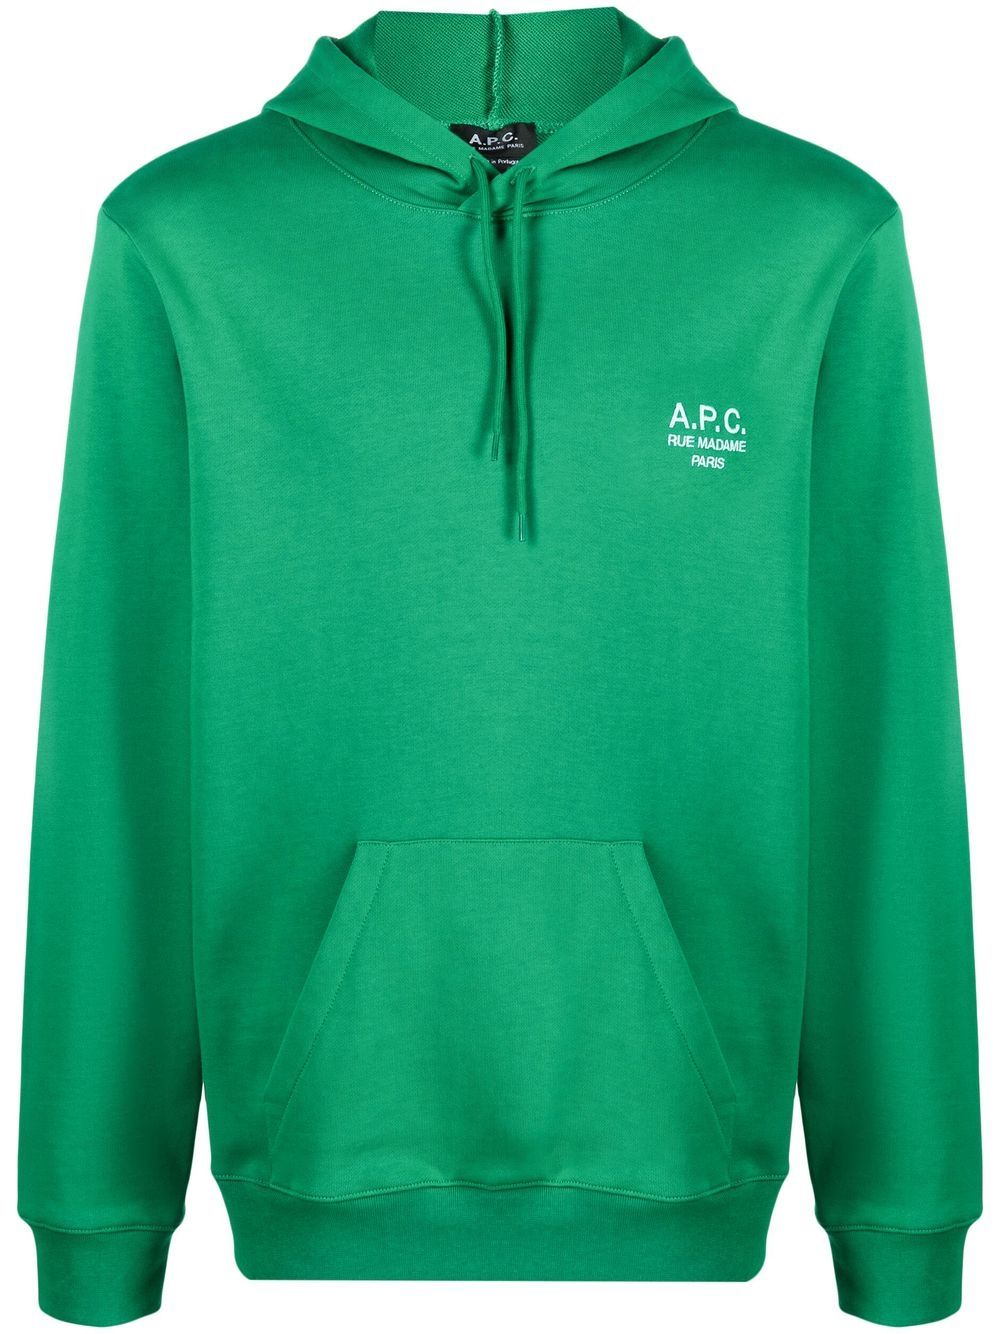 A.P.C. Green Hoodie